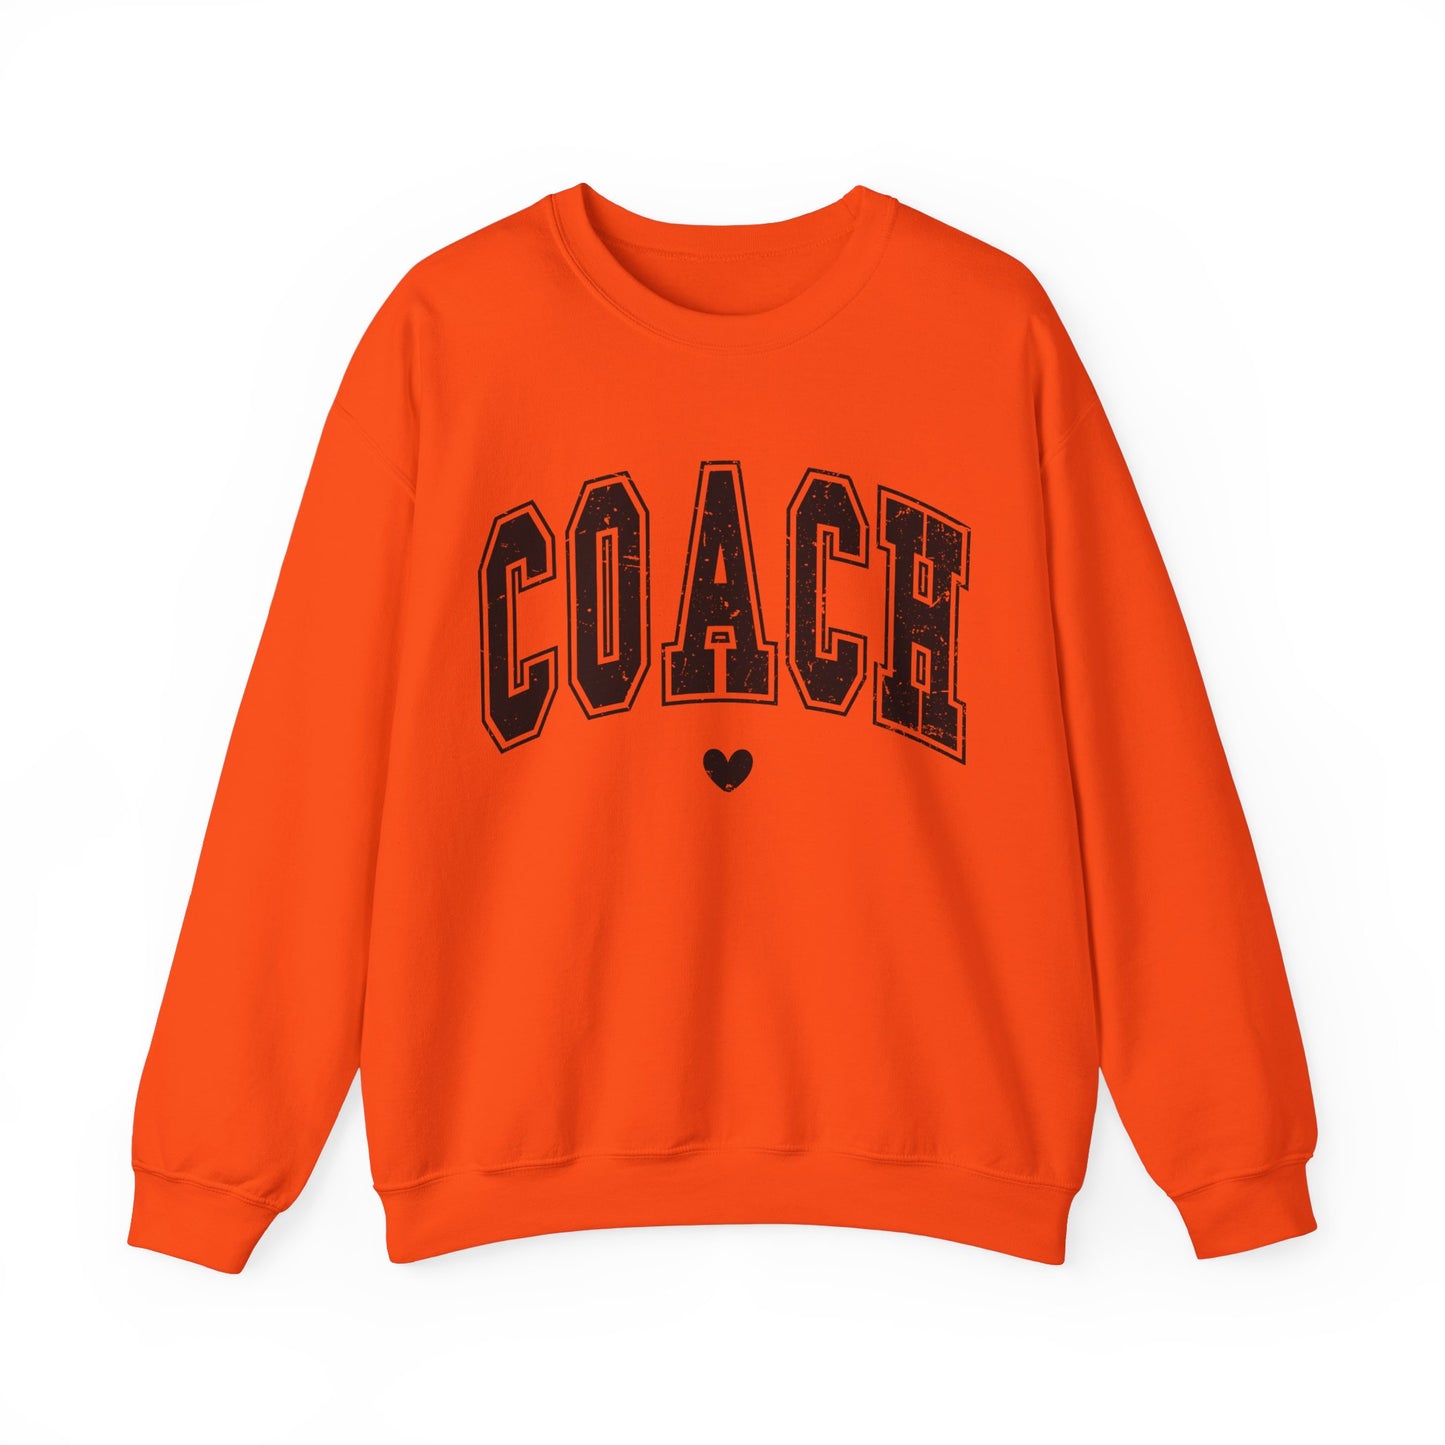 Sports Coach Women's Crewneck Sweatshirt